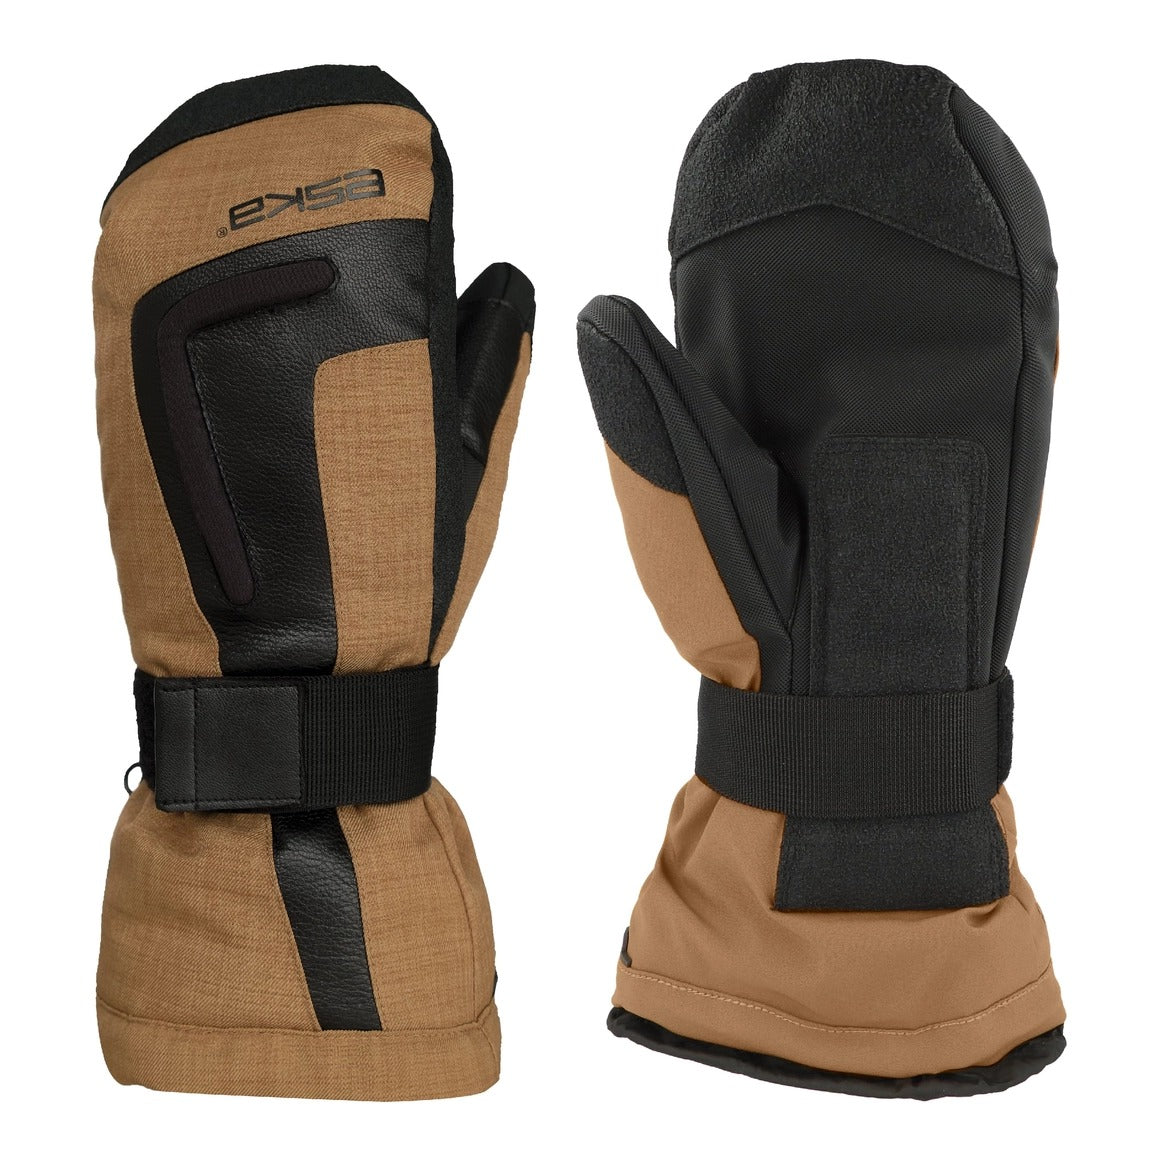 Snow Glove built in wrist Guard - ESKA PINKY- Camel